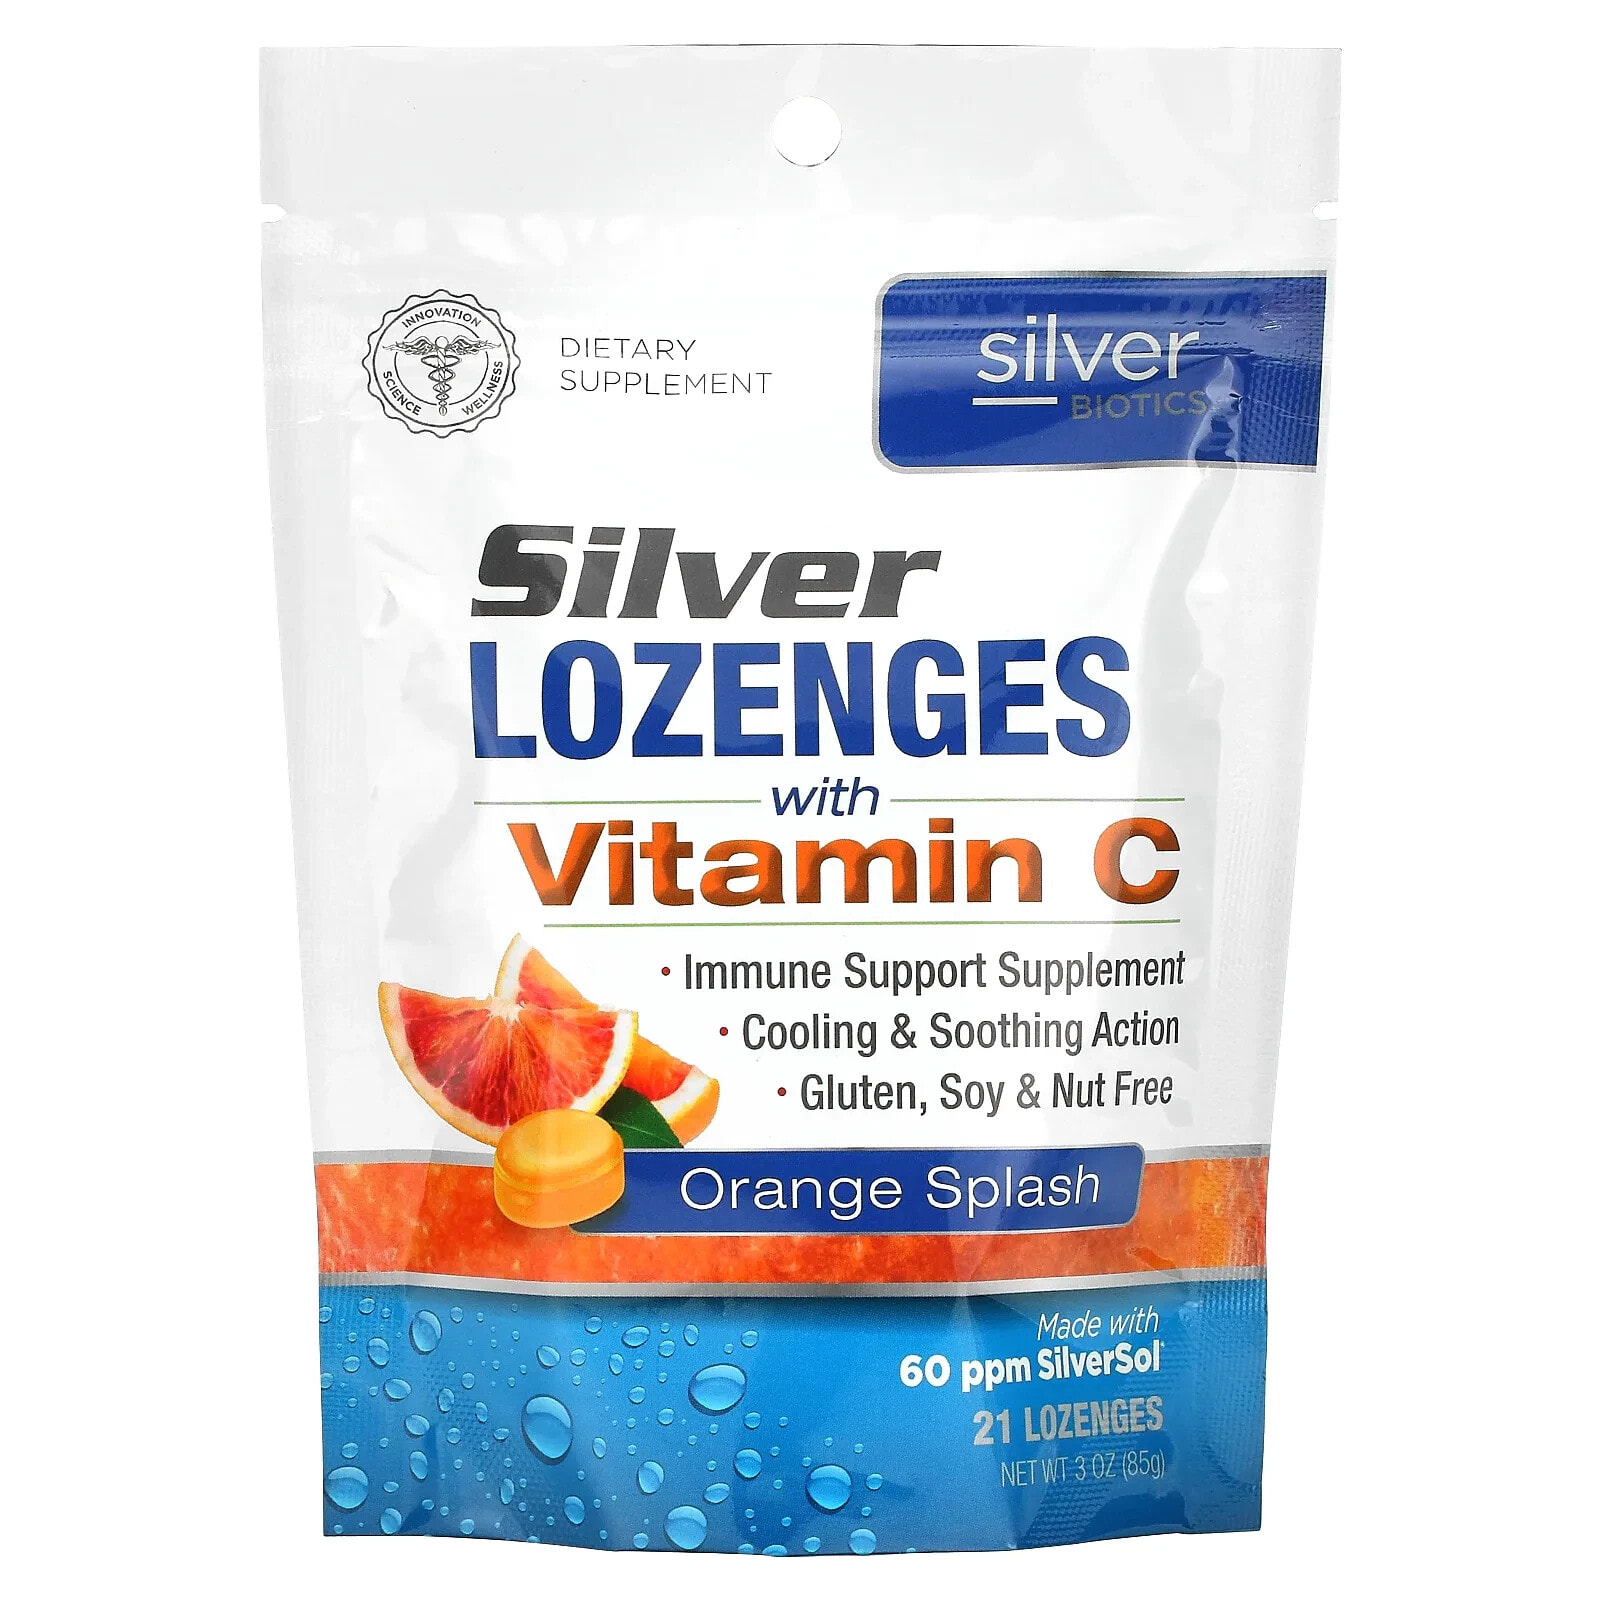 Silver Biotics, Silver Lozenges with Vitamin C, Orange Splash, 21 Lozenges, 3 oz (85 g)